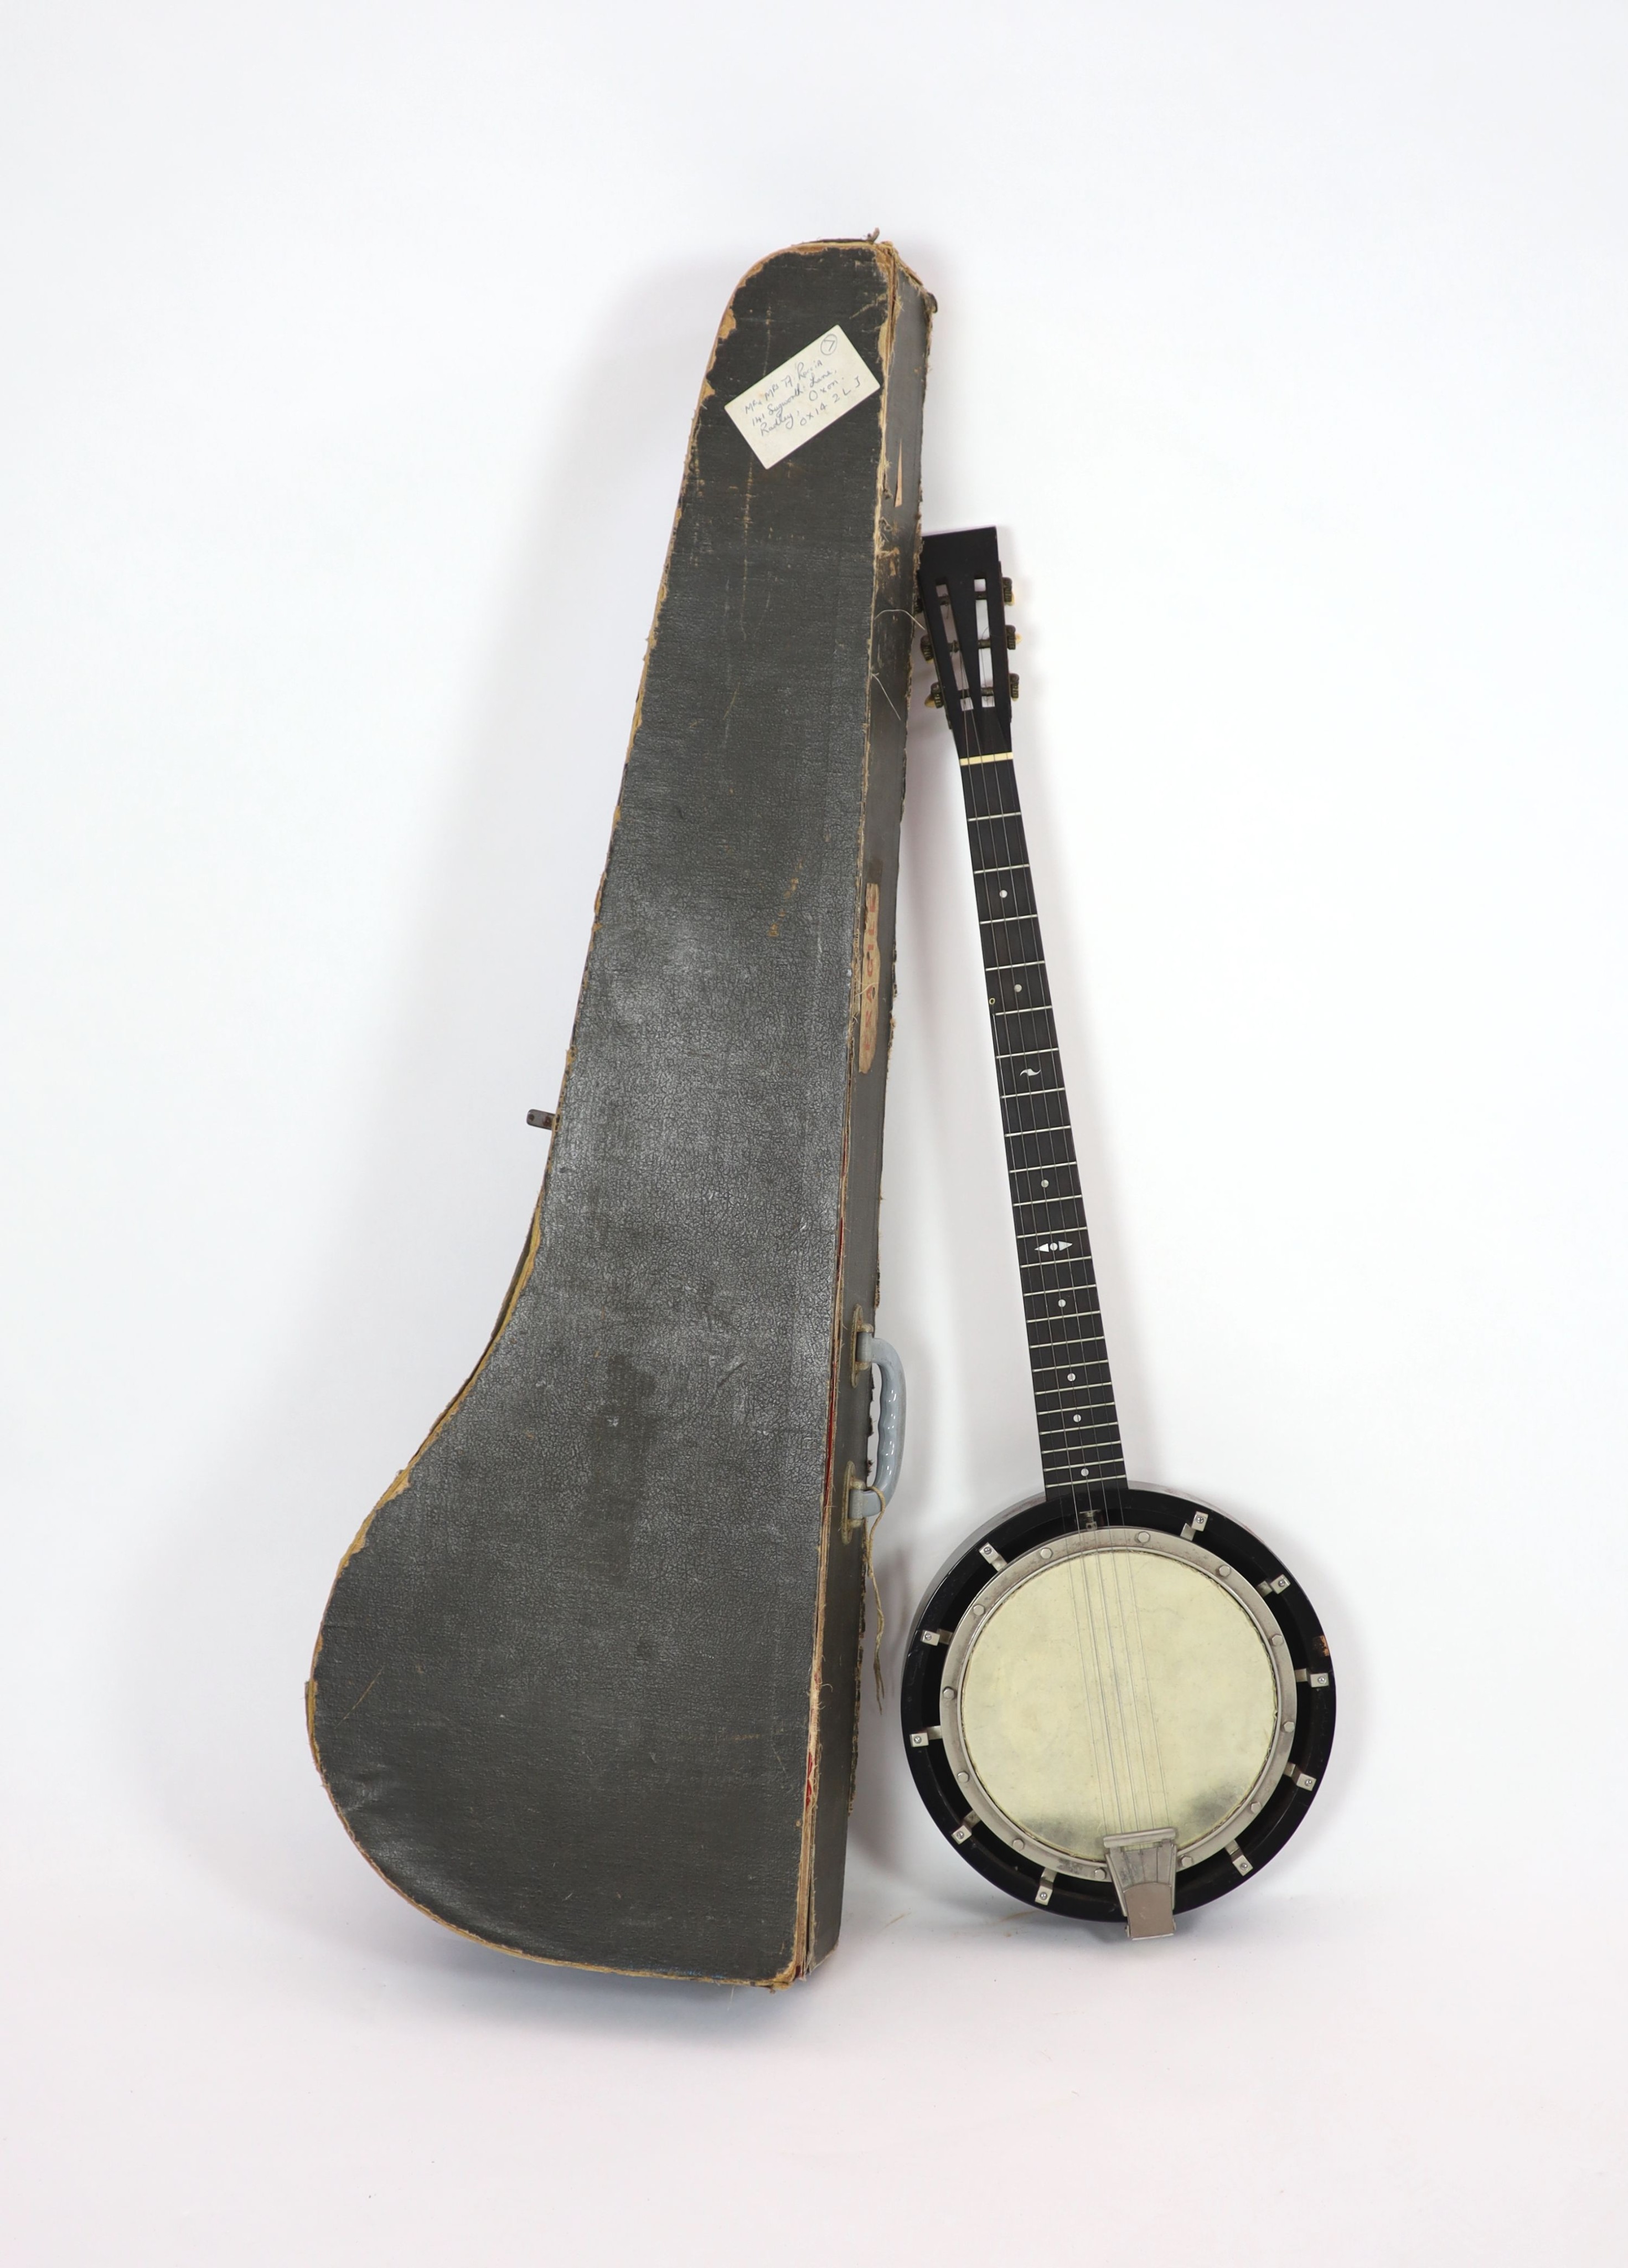 A Cammeyer banjo, length 93cm